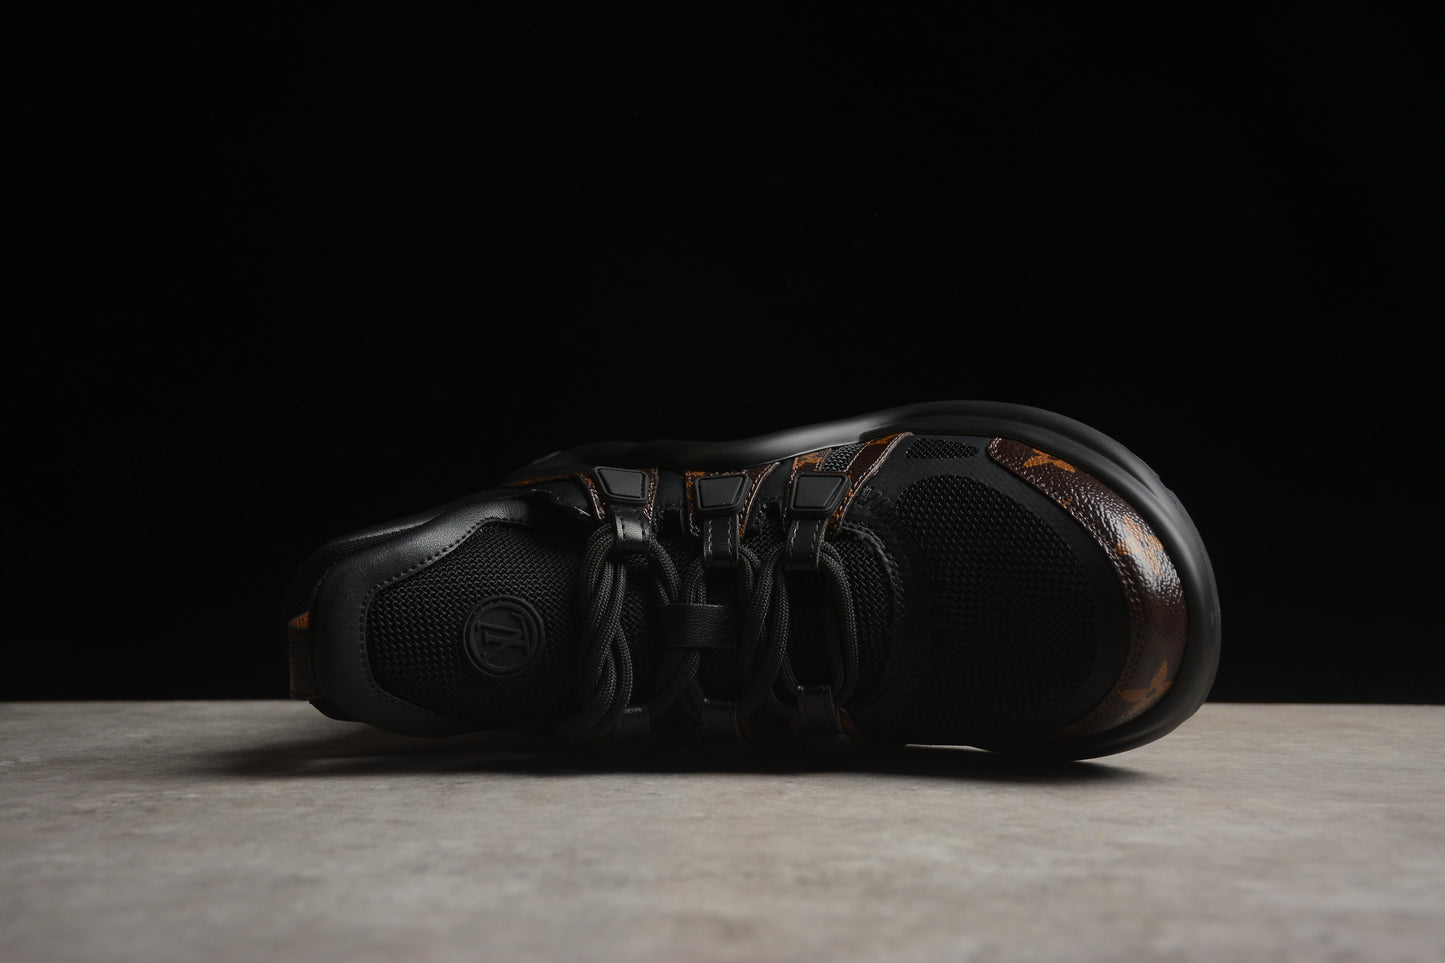 Louis Vuitton Archlight Sneakers LV Archlight - Black